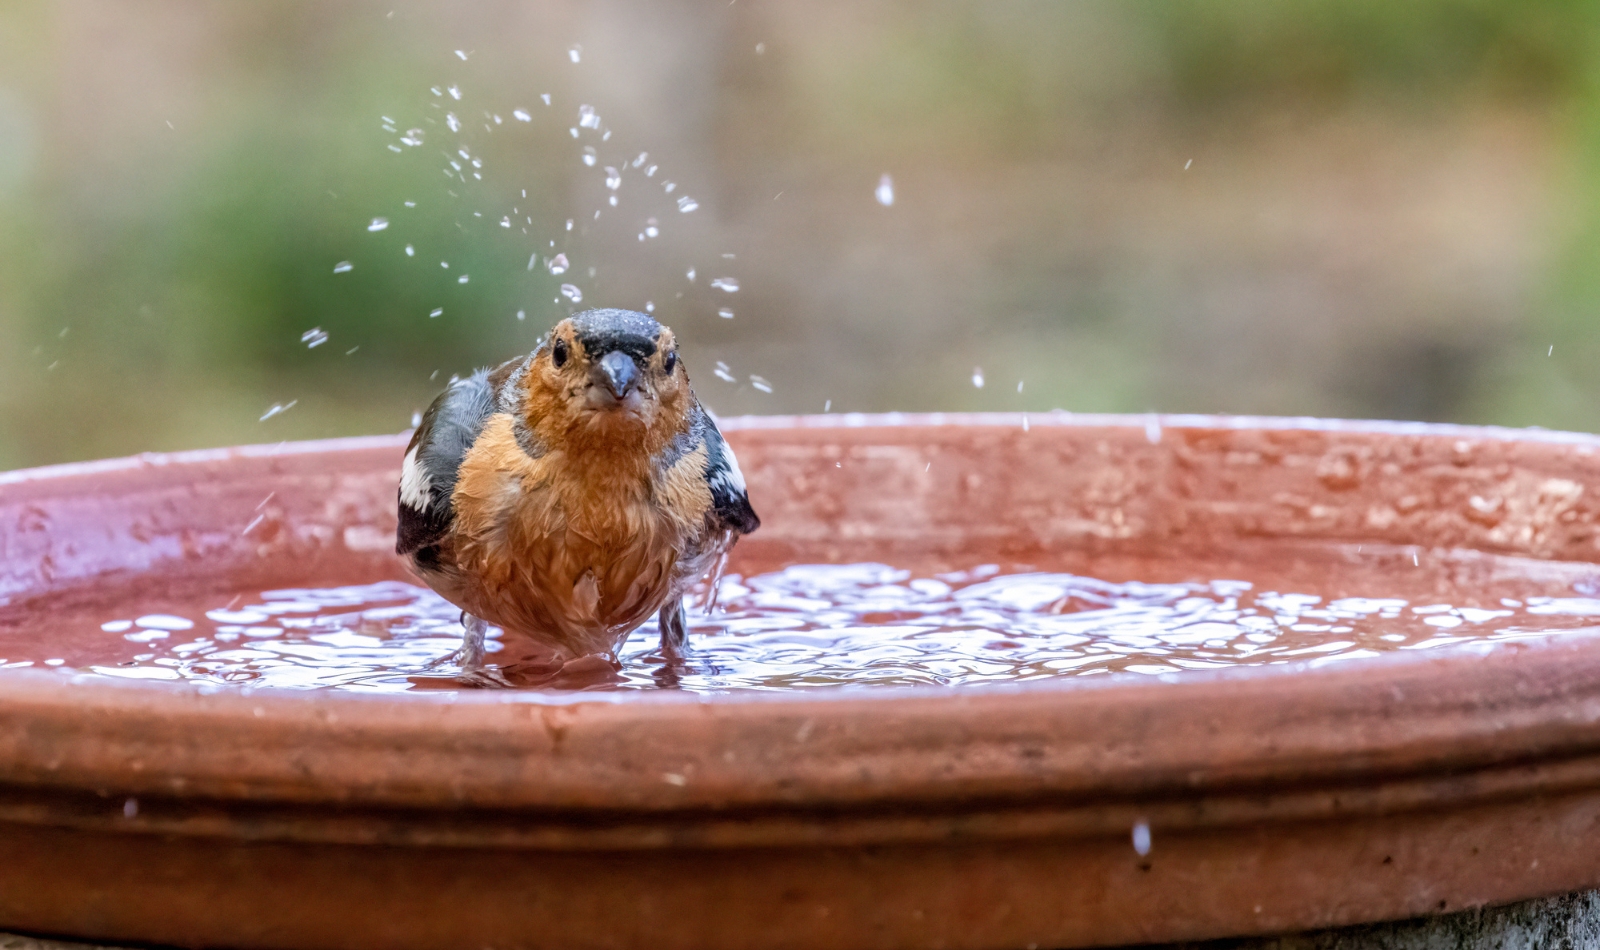 a bird bath